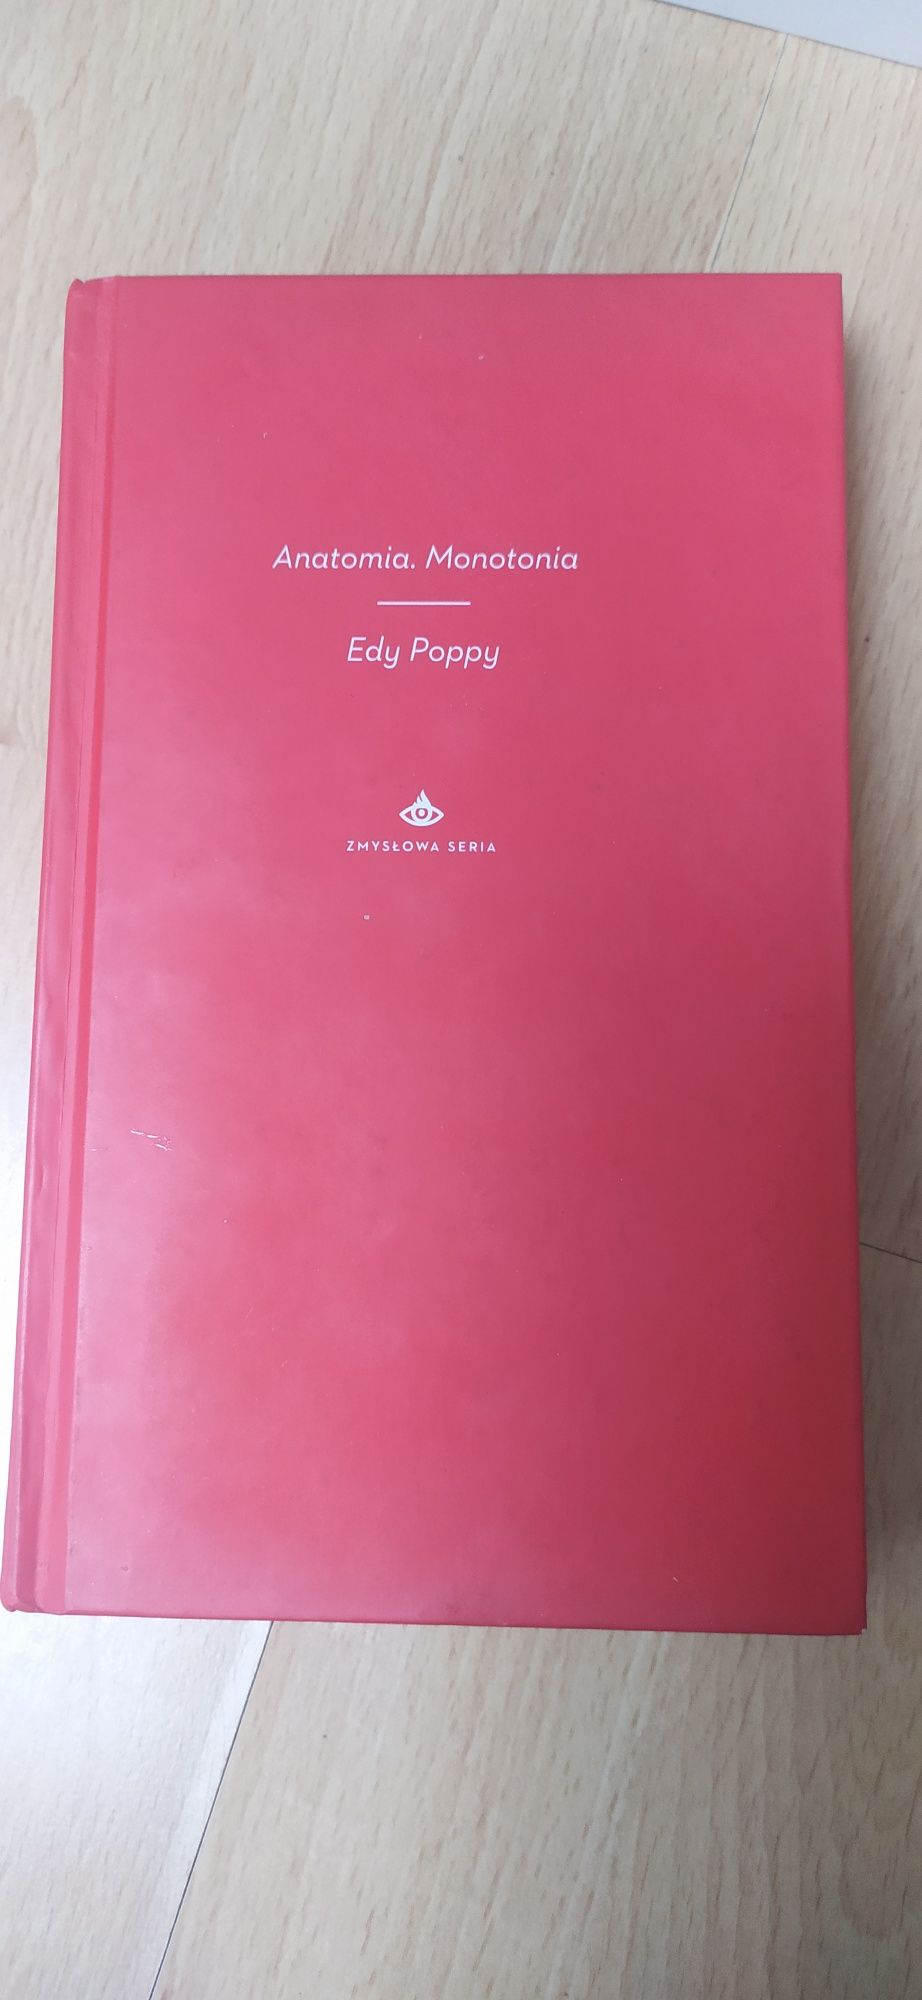 Książka pt. "Anatomia. Monotonia" Edy Poppy